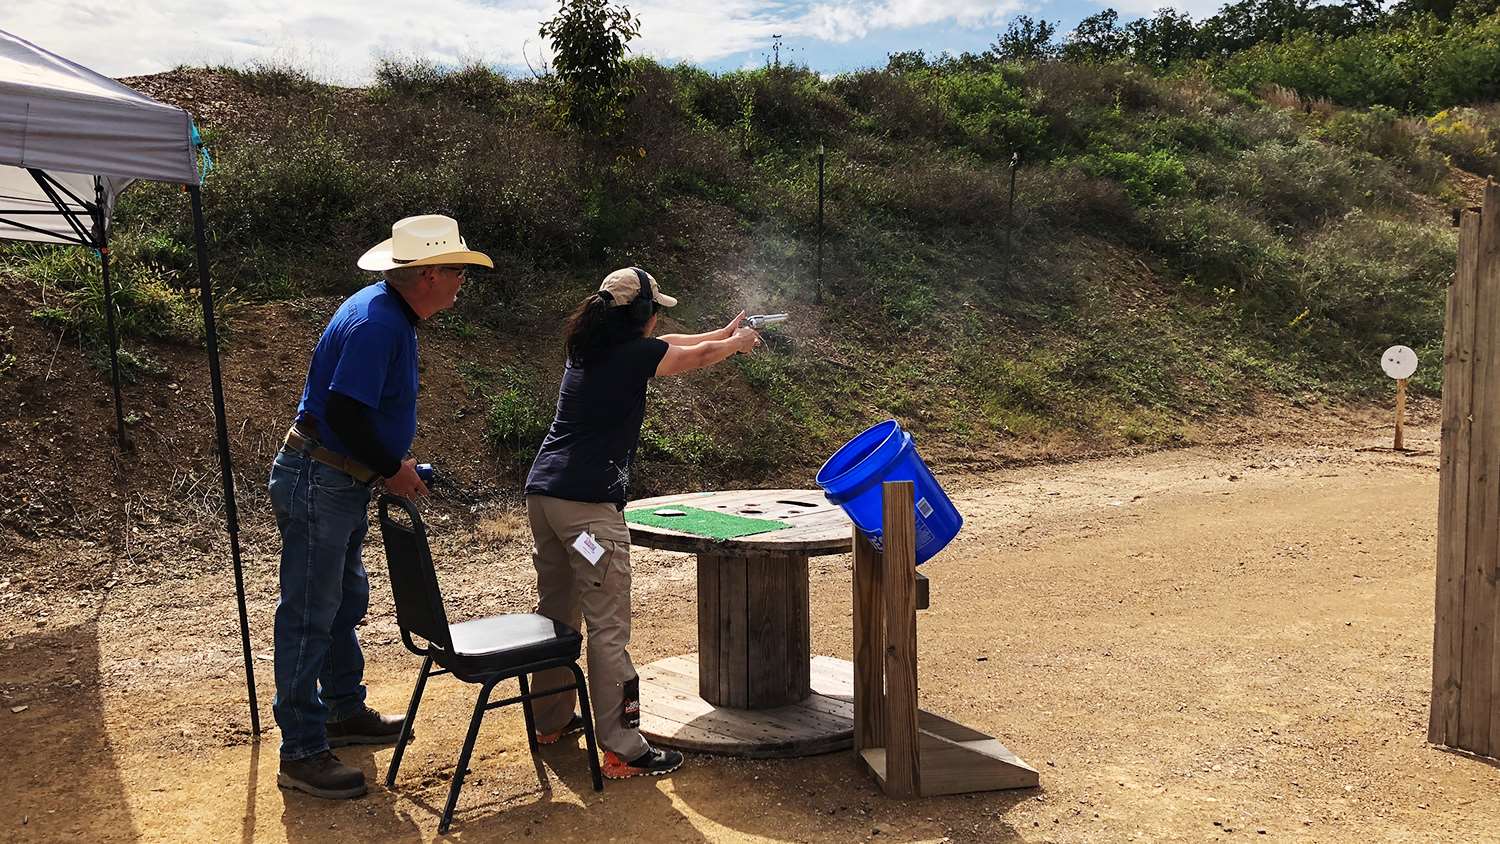 Cowboy Action Shooting | NRA World Shooting Championship